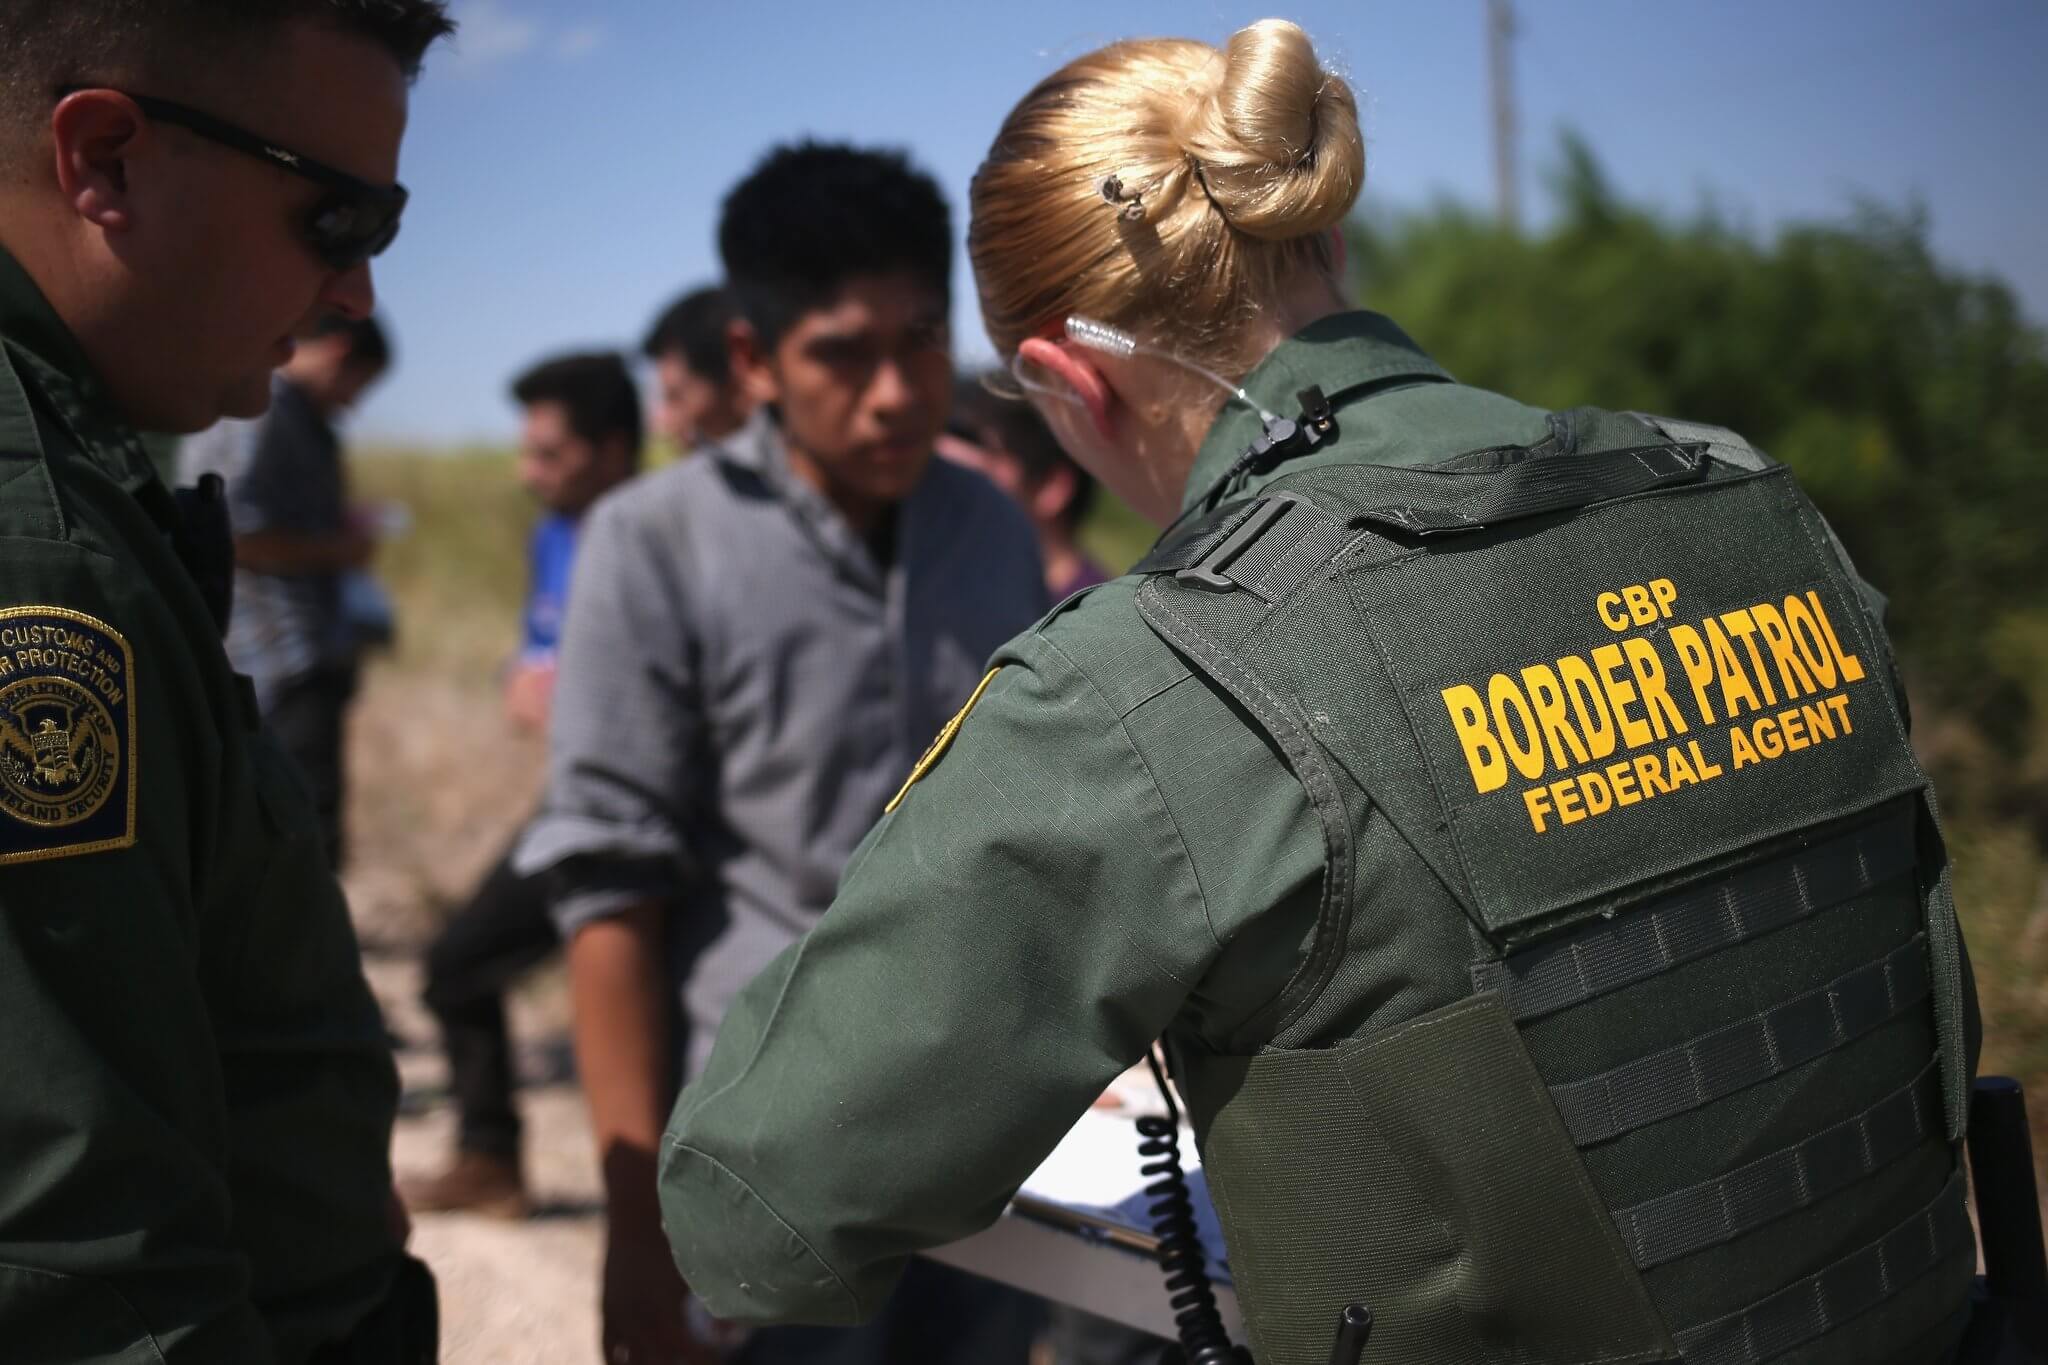 indocumentados probable latimes vacunar frontera cruzan analiza inmigrantes officer